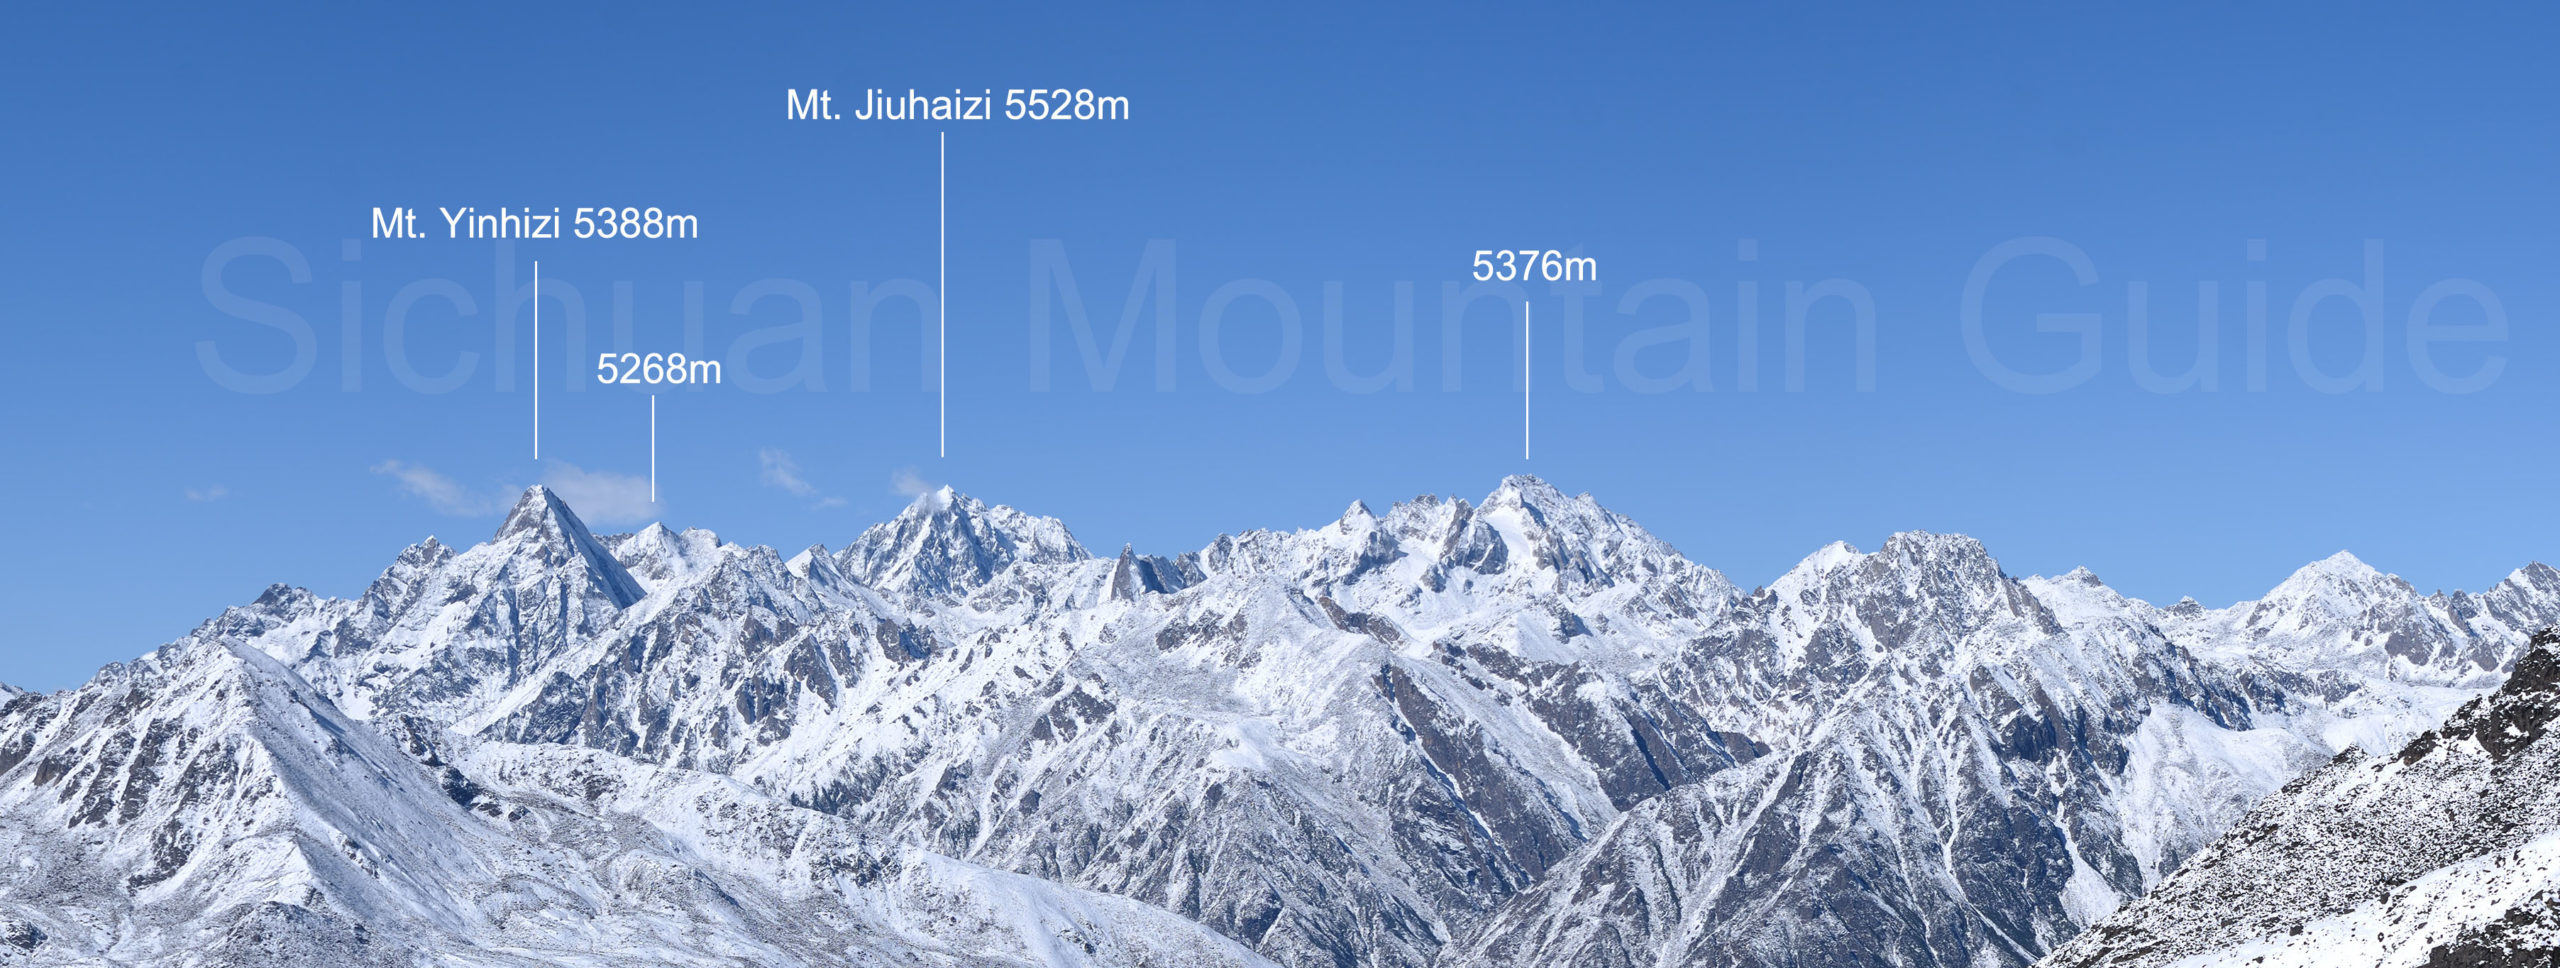 Jiuhaizi Mountains East